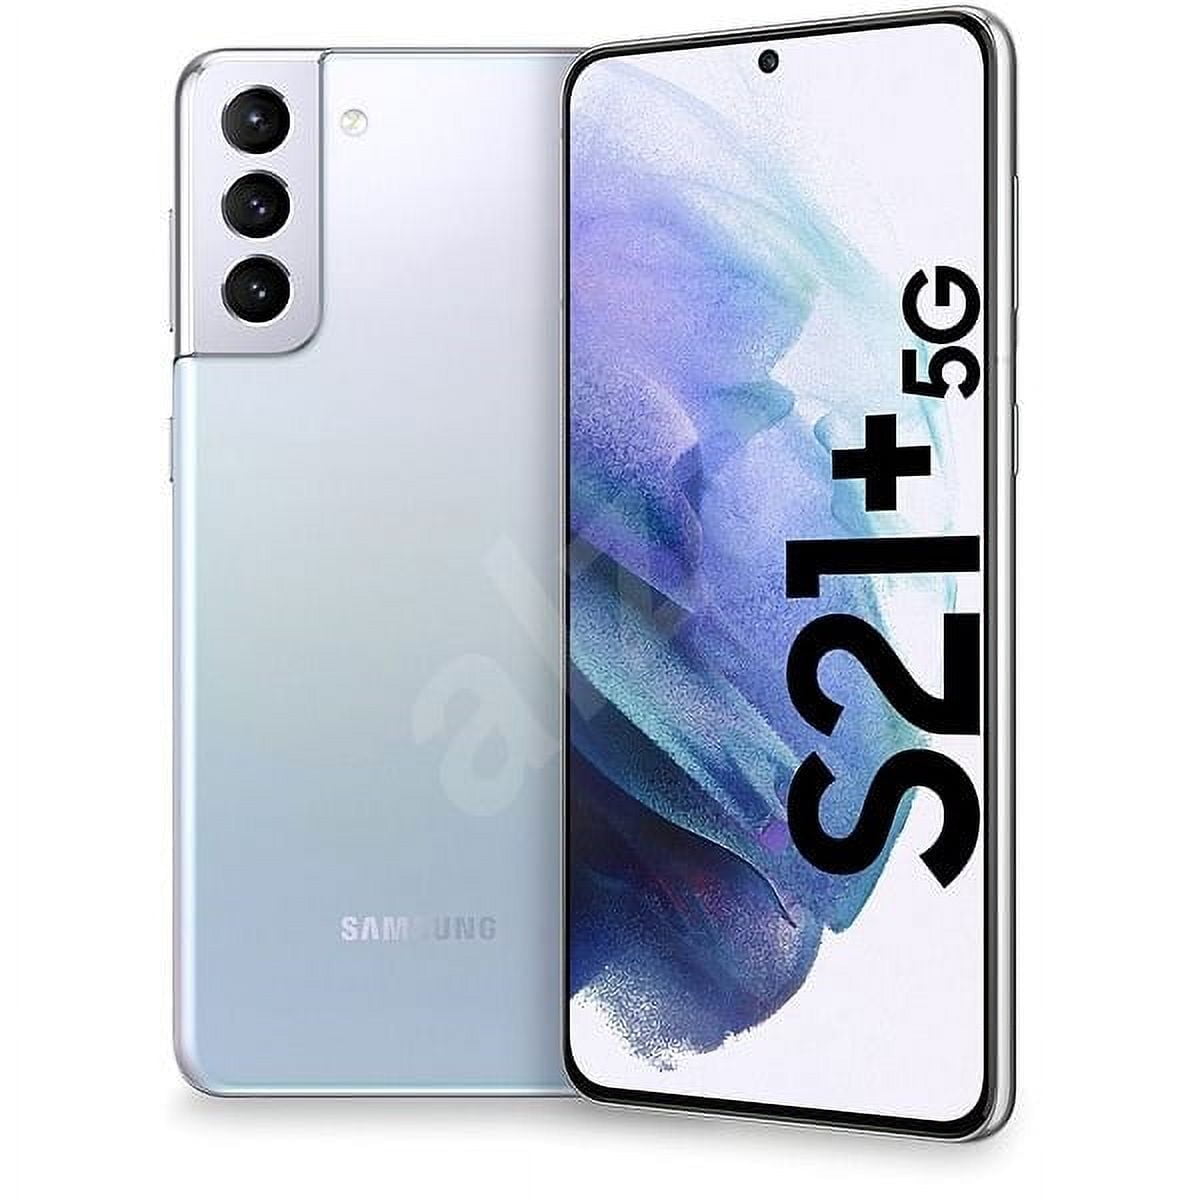 Samsung Galaxy S21 + Plus 5G 128 / 256GB SM-G996U1 Paraguay